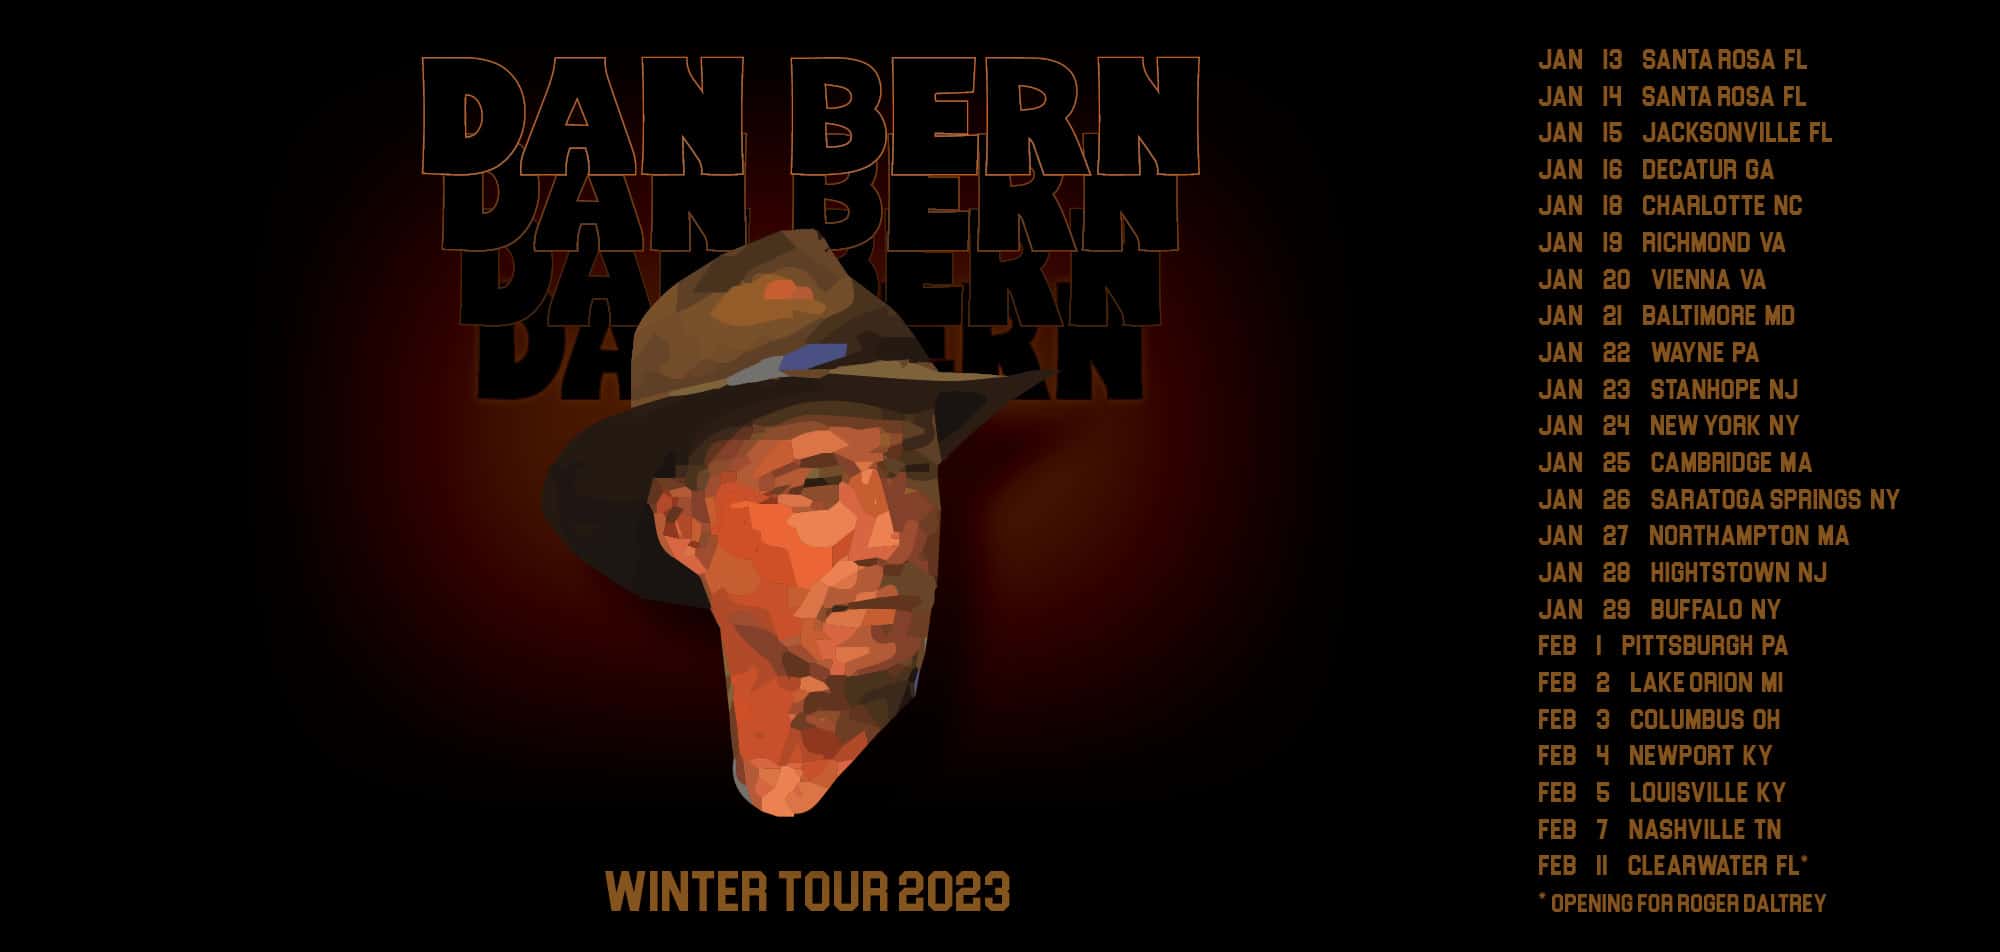 Dan Bern 2023 winter tour dates updated